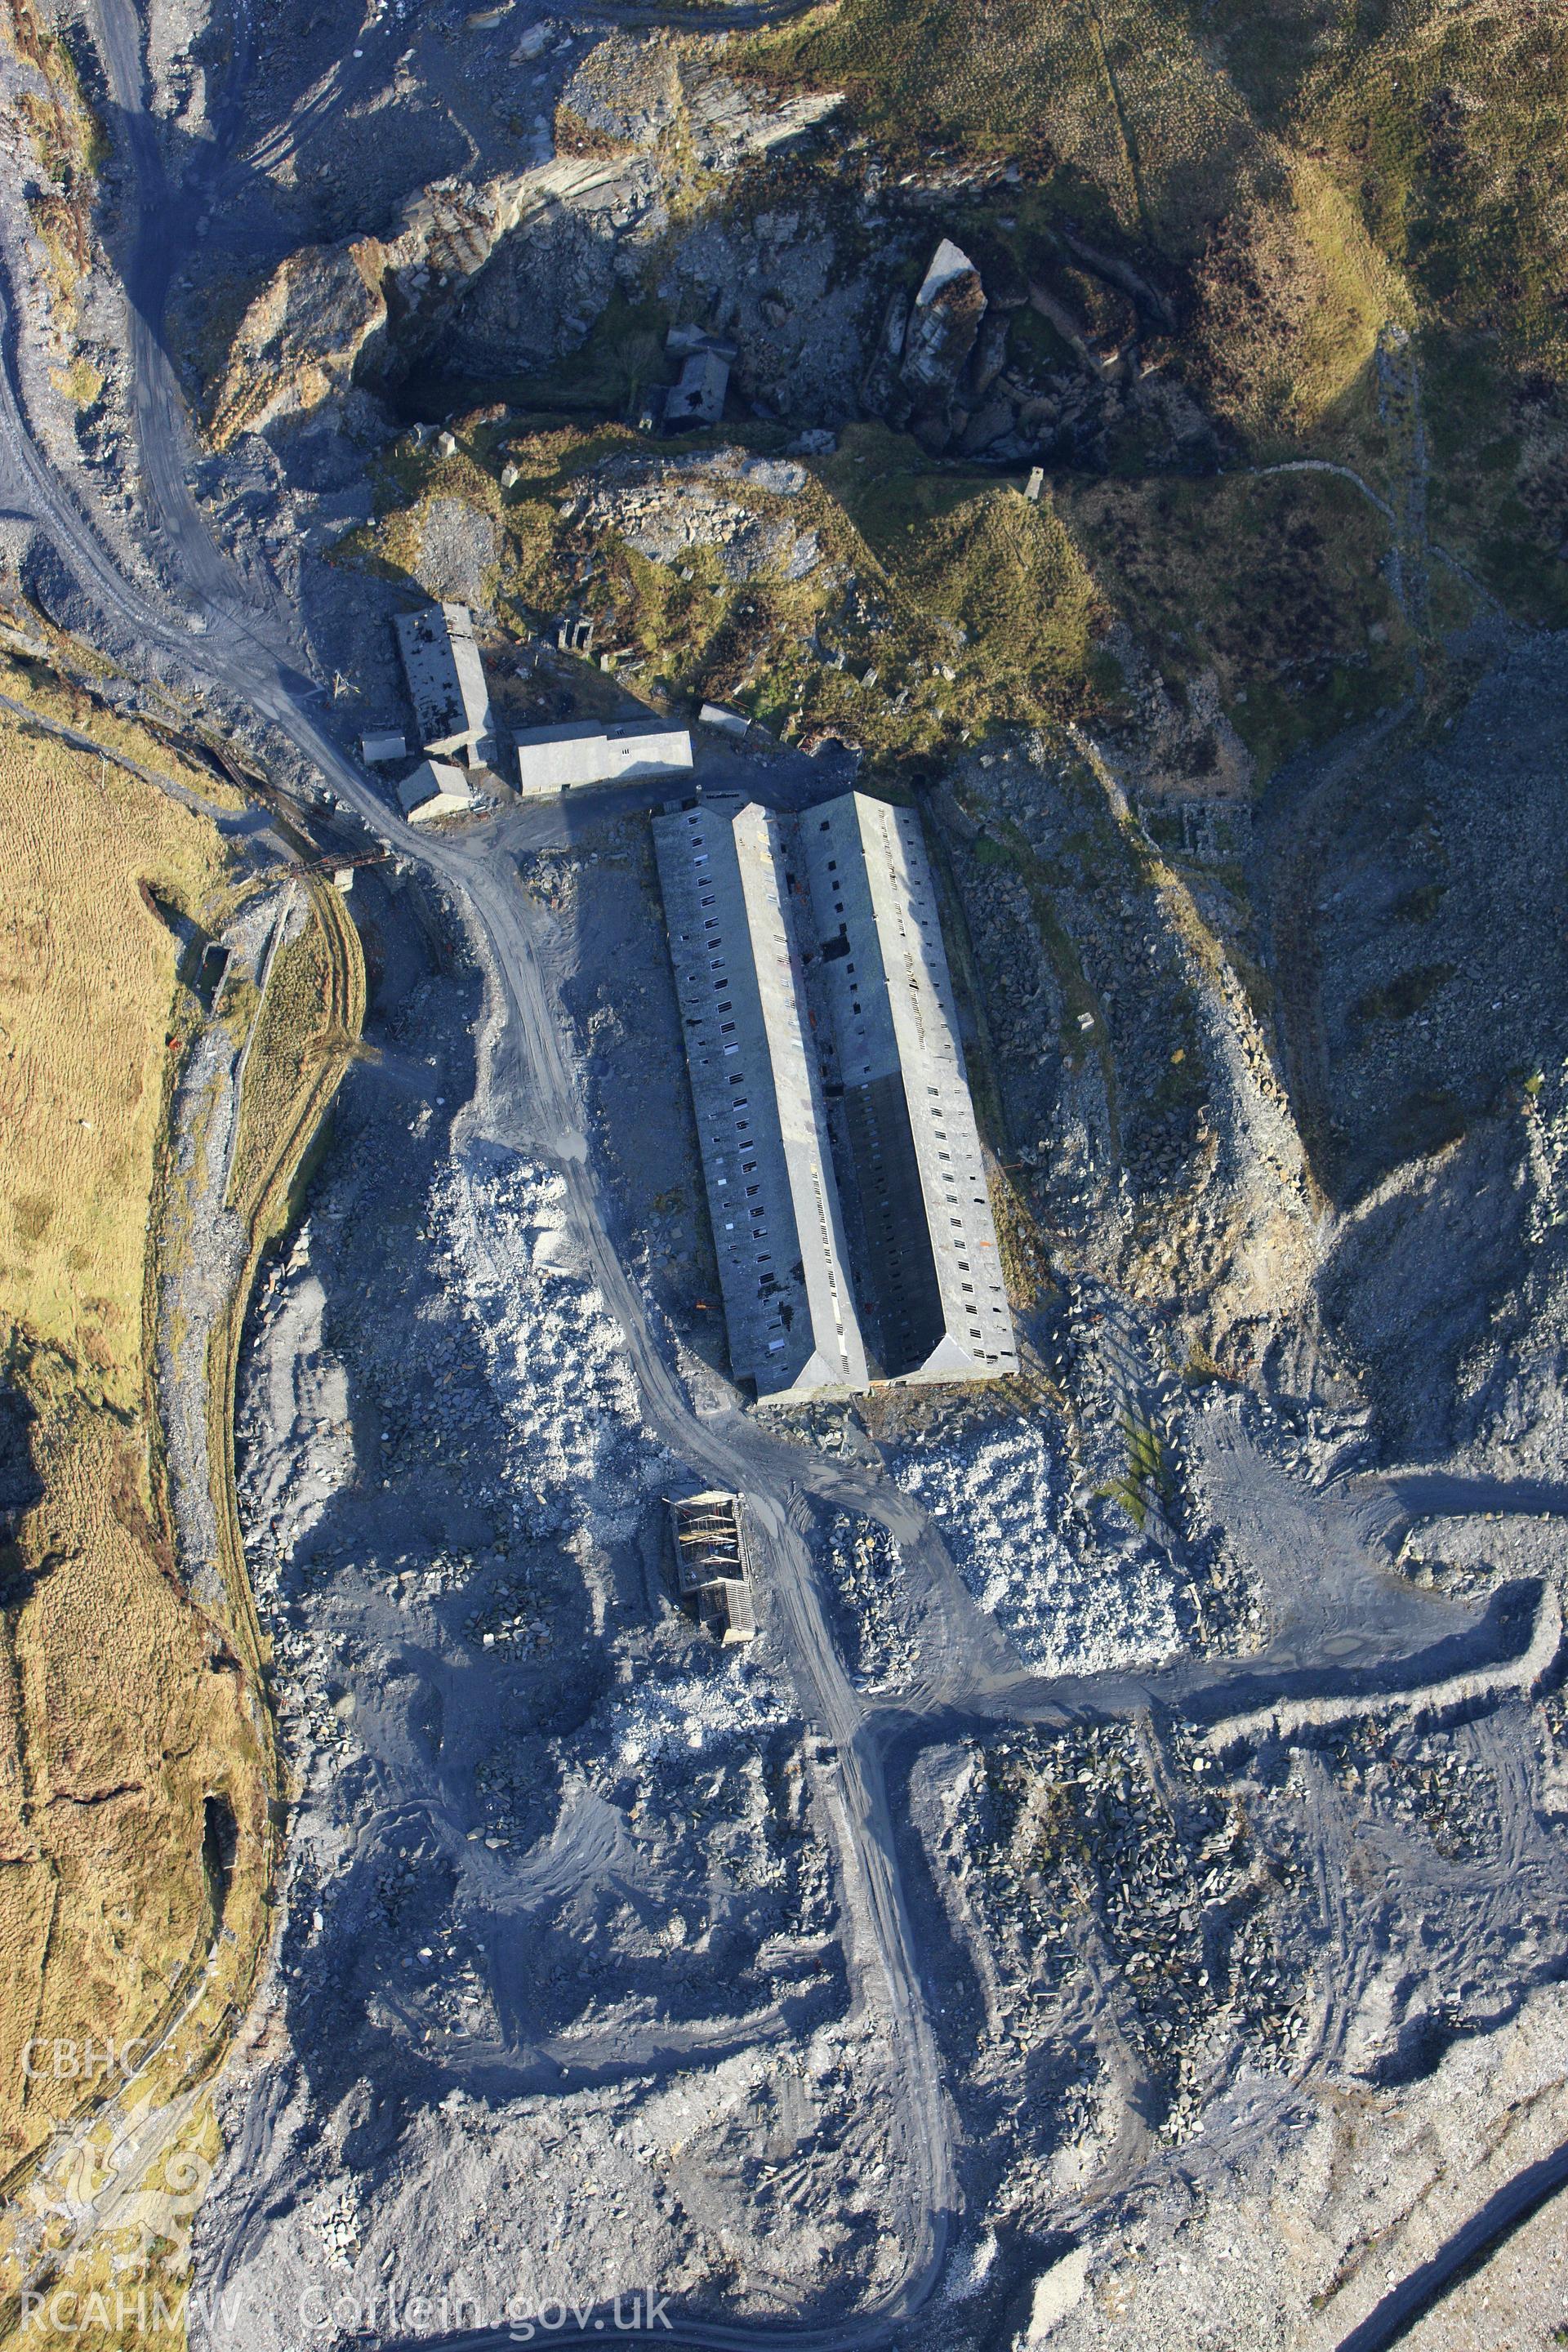 RCAHMW colour oblique photograph of Maen-Offeren slate quarry, Blaenau Ffestiniog. Taken by Toby Driver on 08/02/2011.